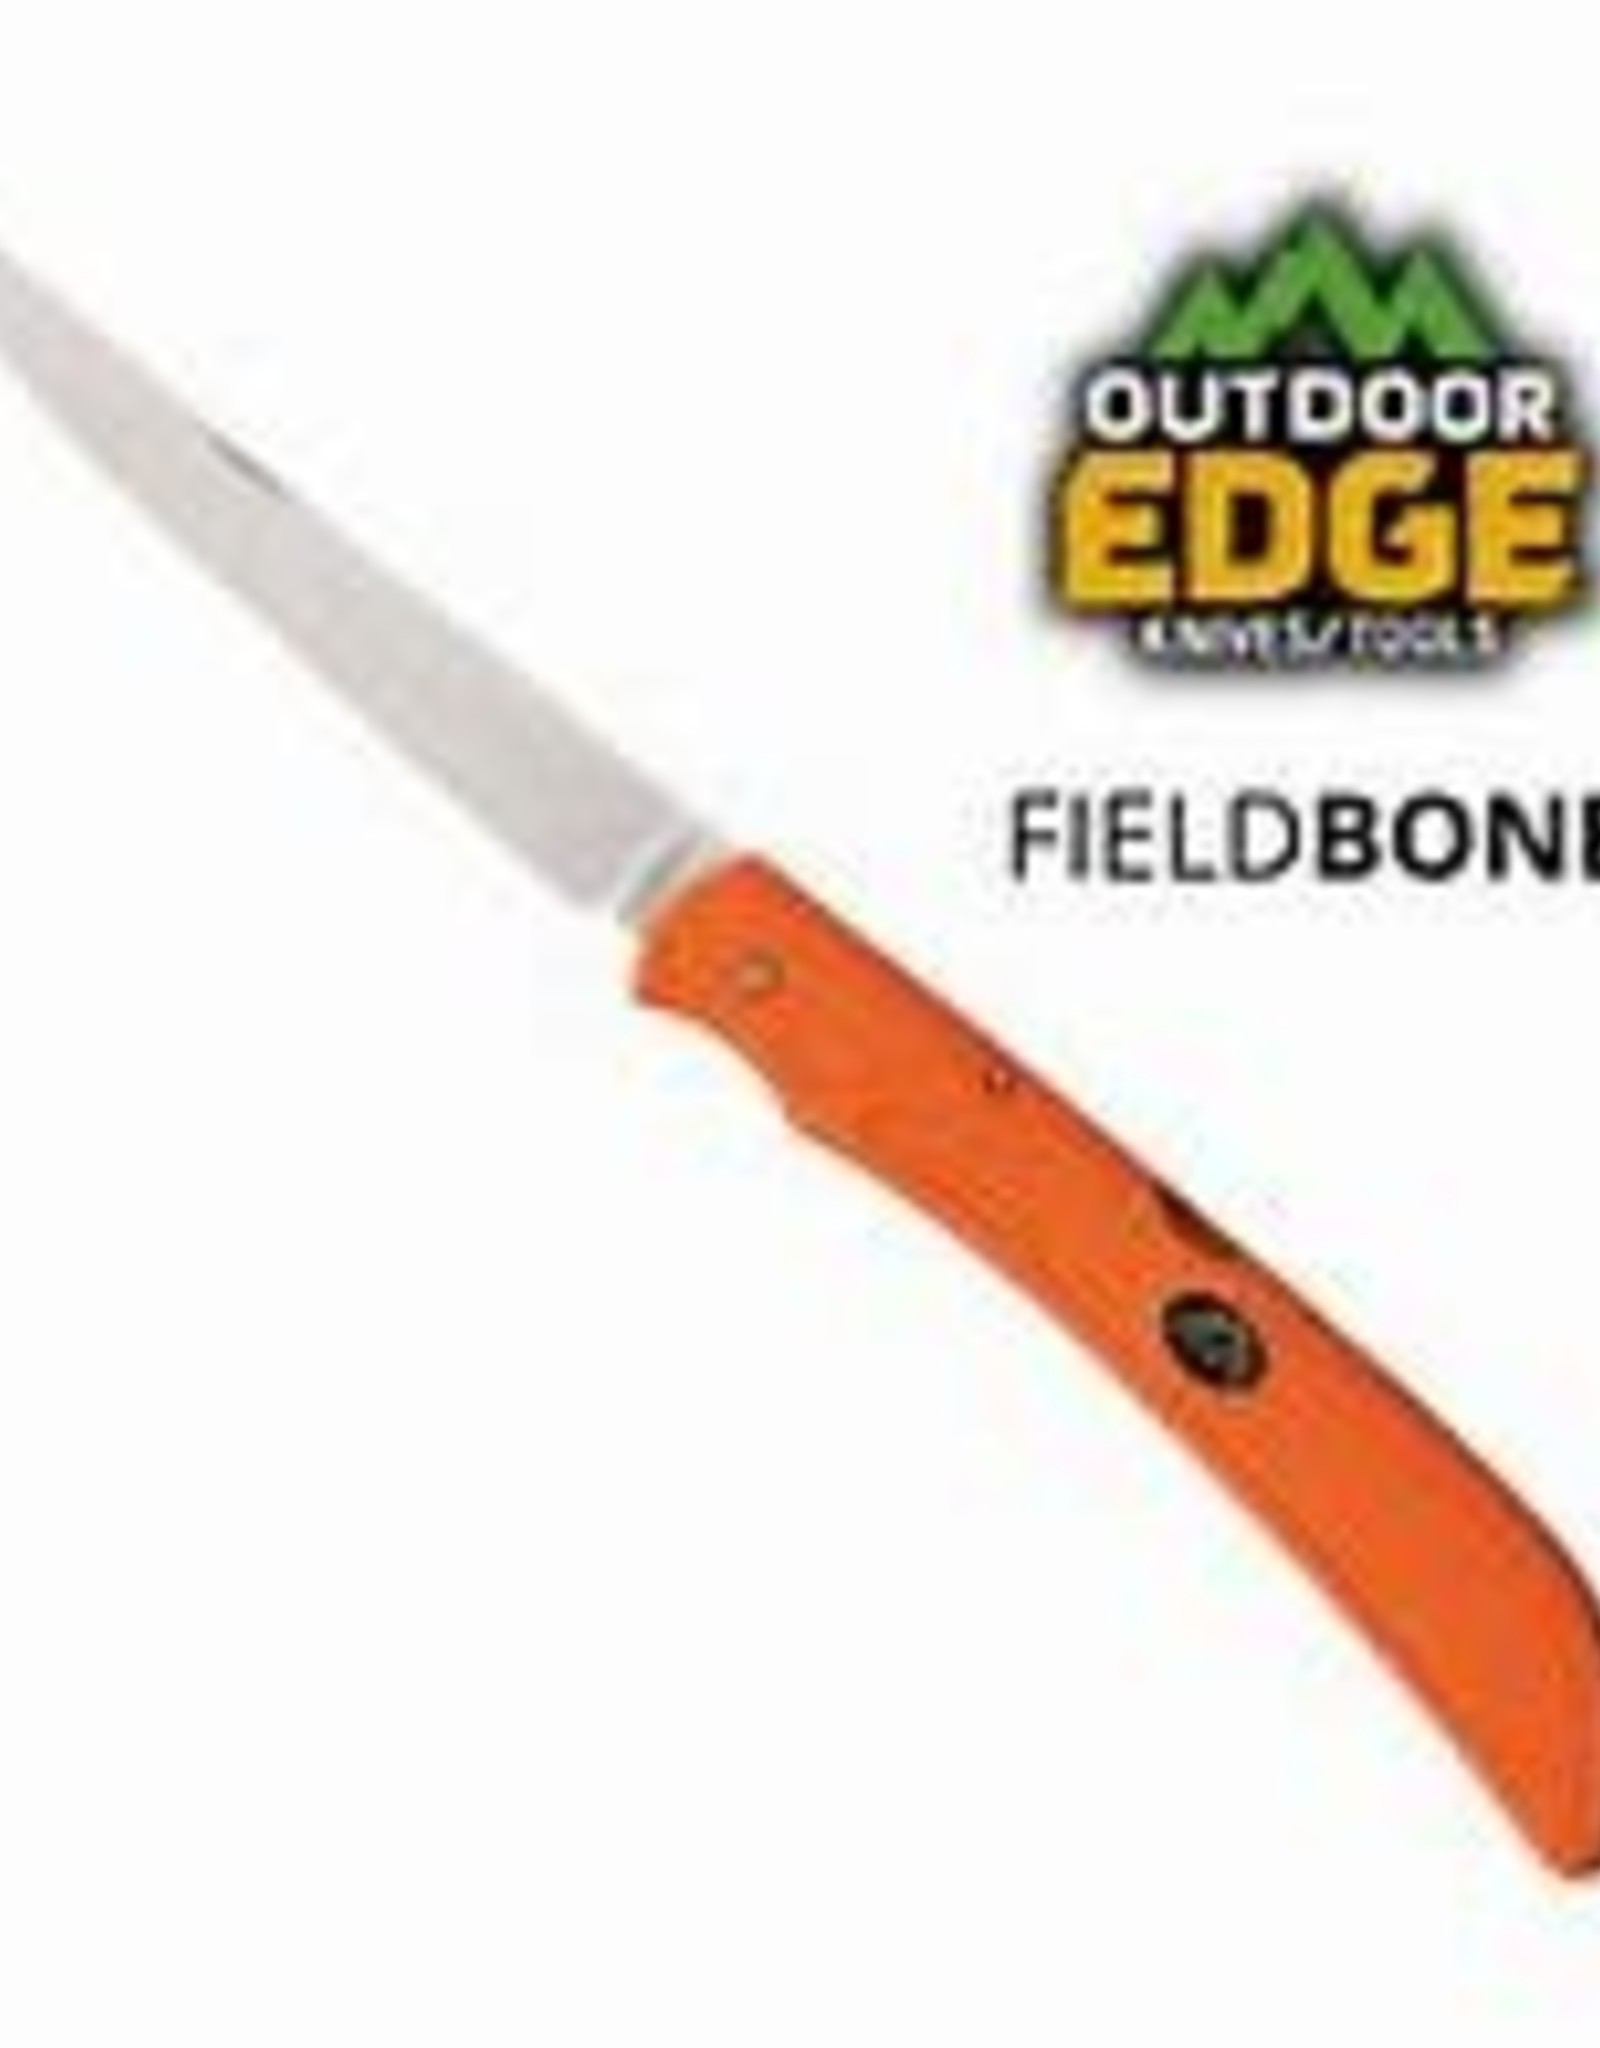 Outdoor Edge Field Bone